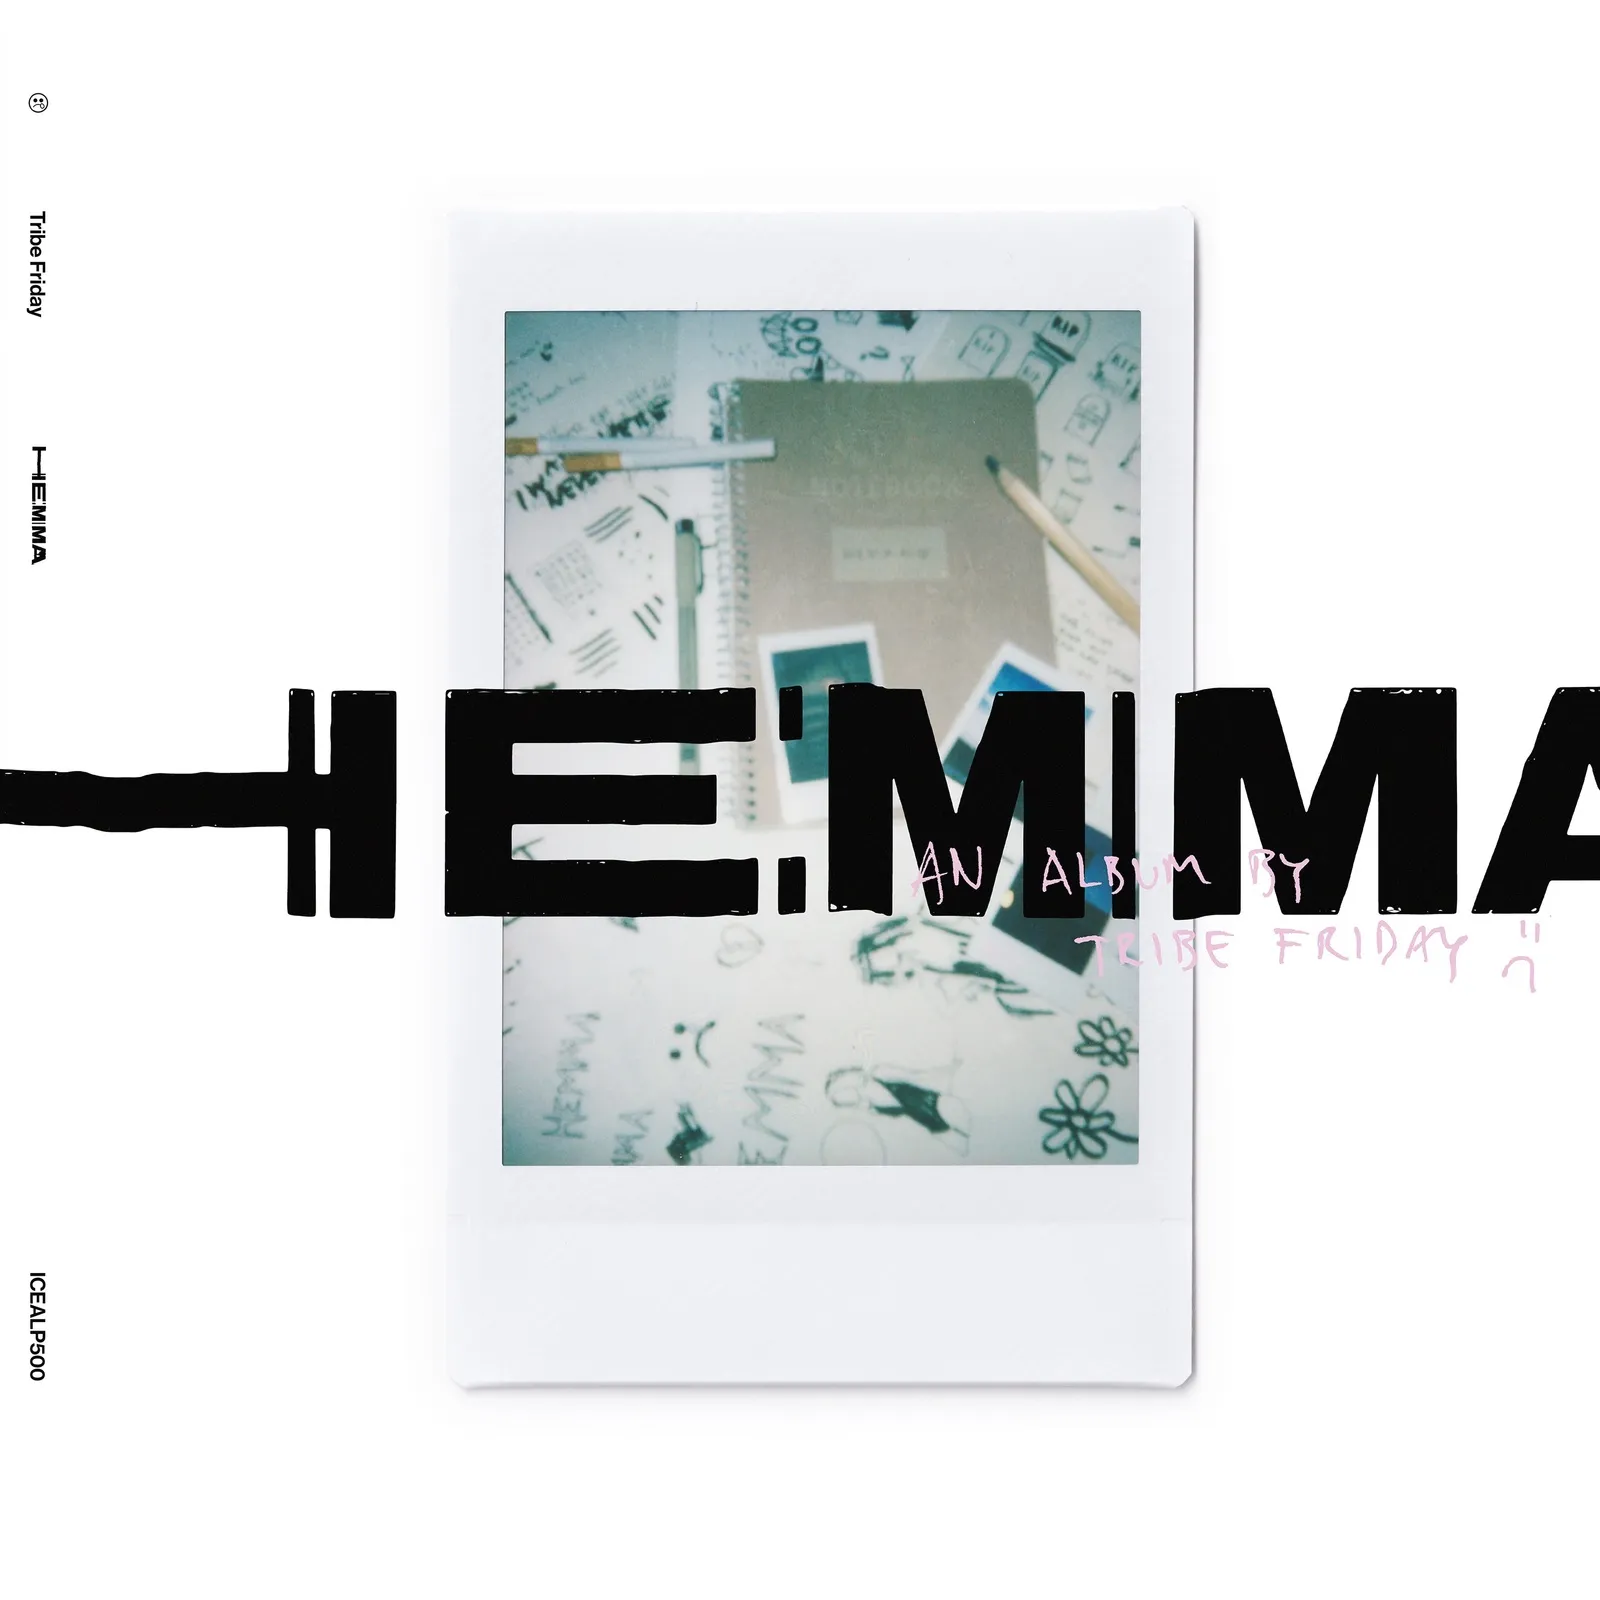 Buy Hemma via Rough Trade